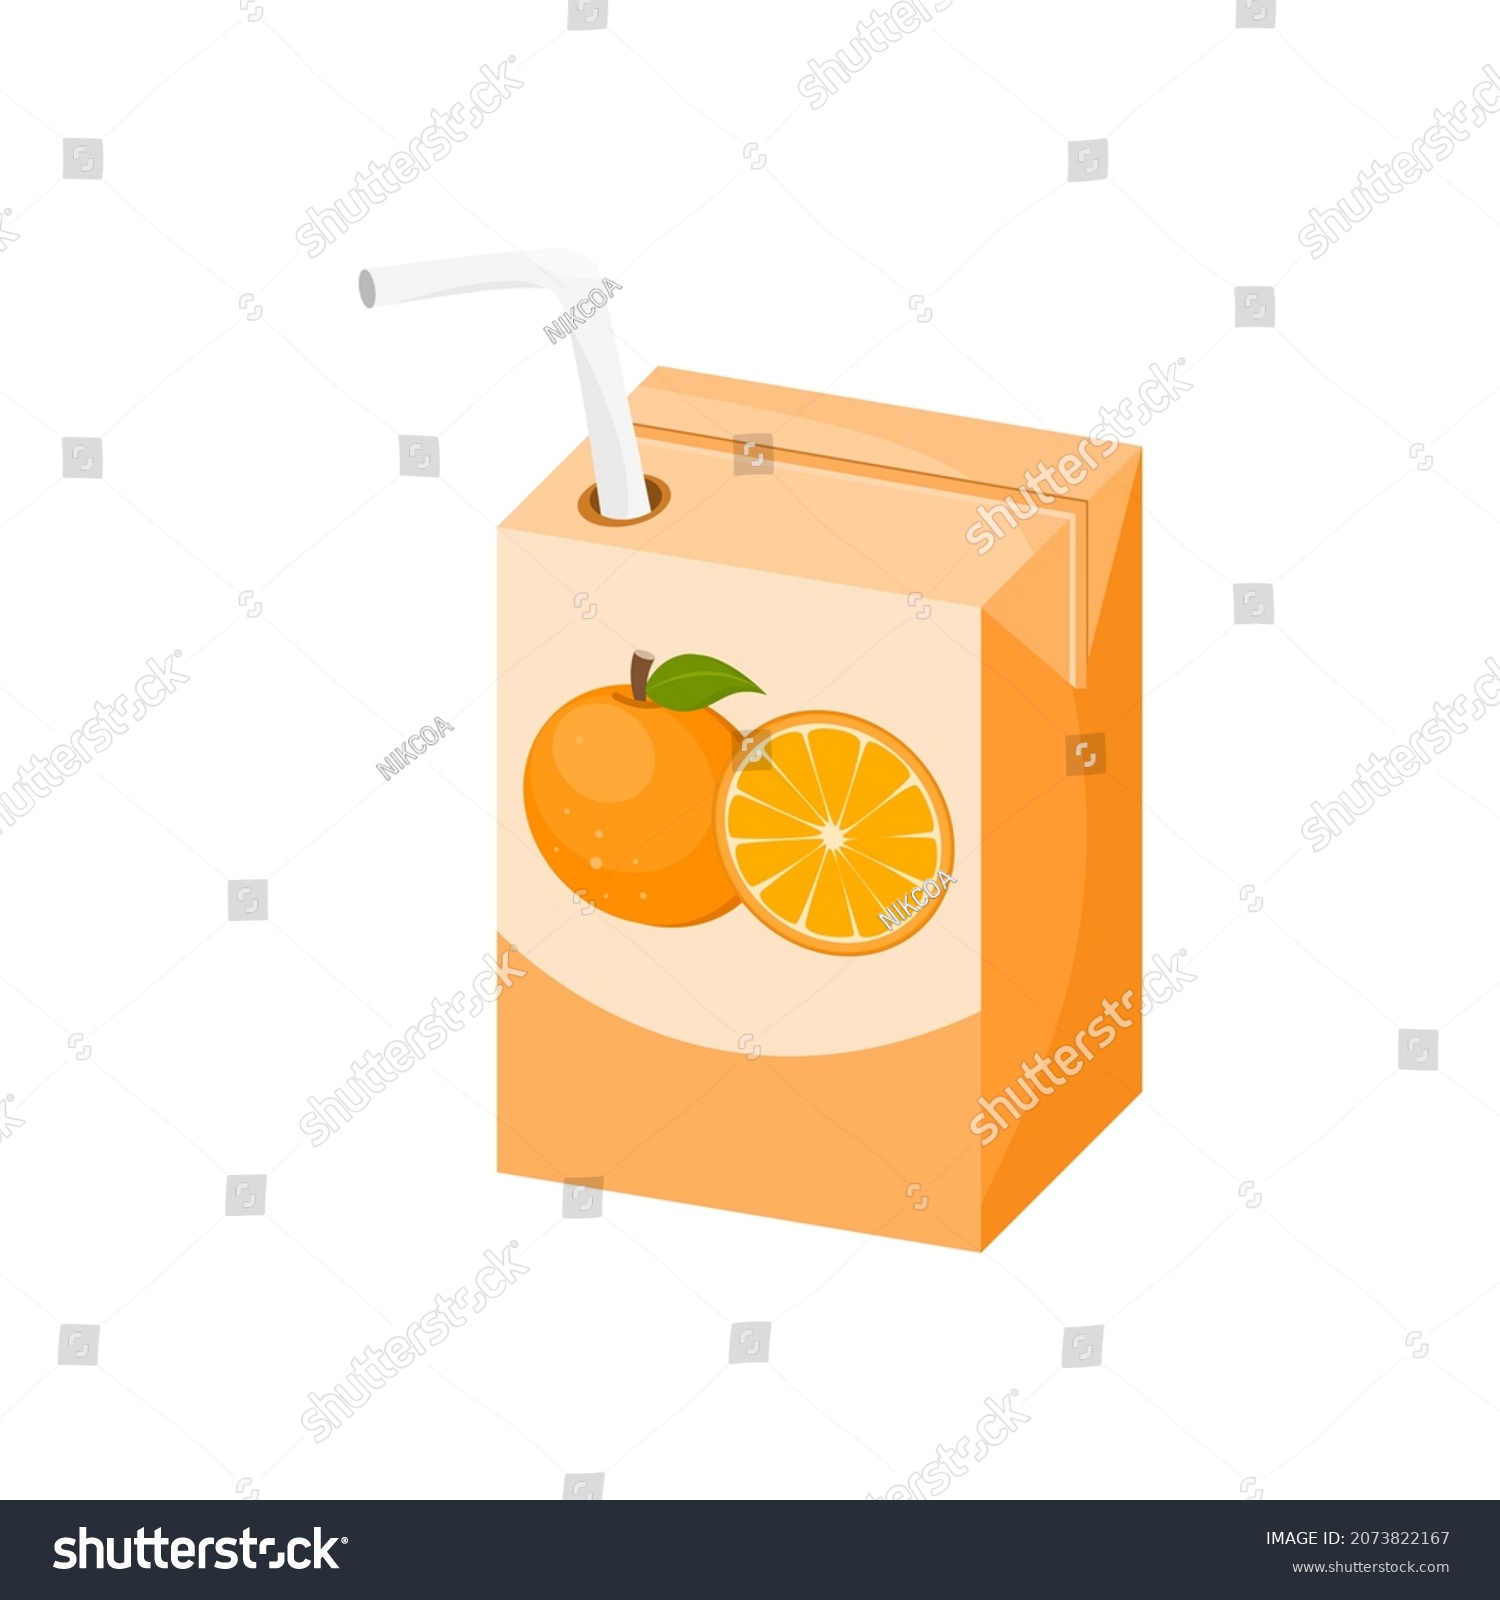 SVG of Organic orange juice carton box with drinking straw isolated on white background. Icon vector illustration. svg